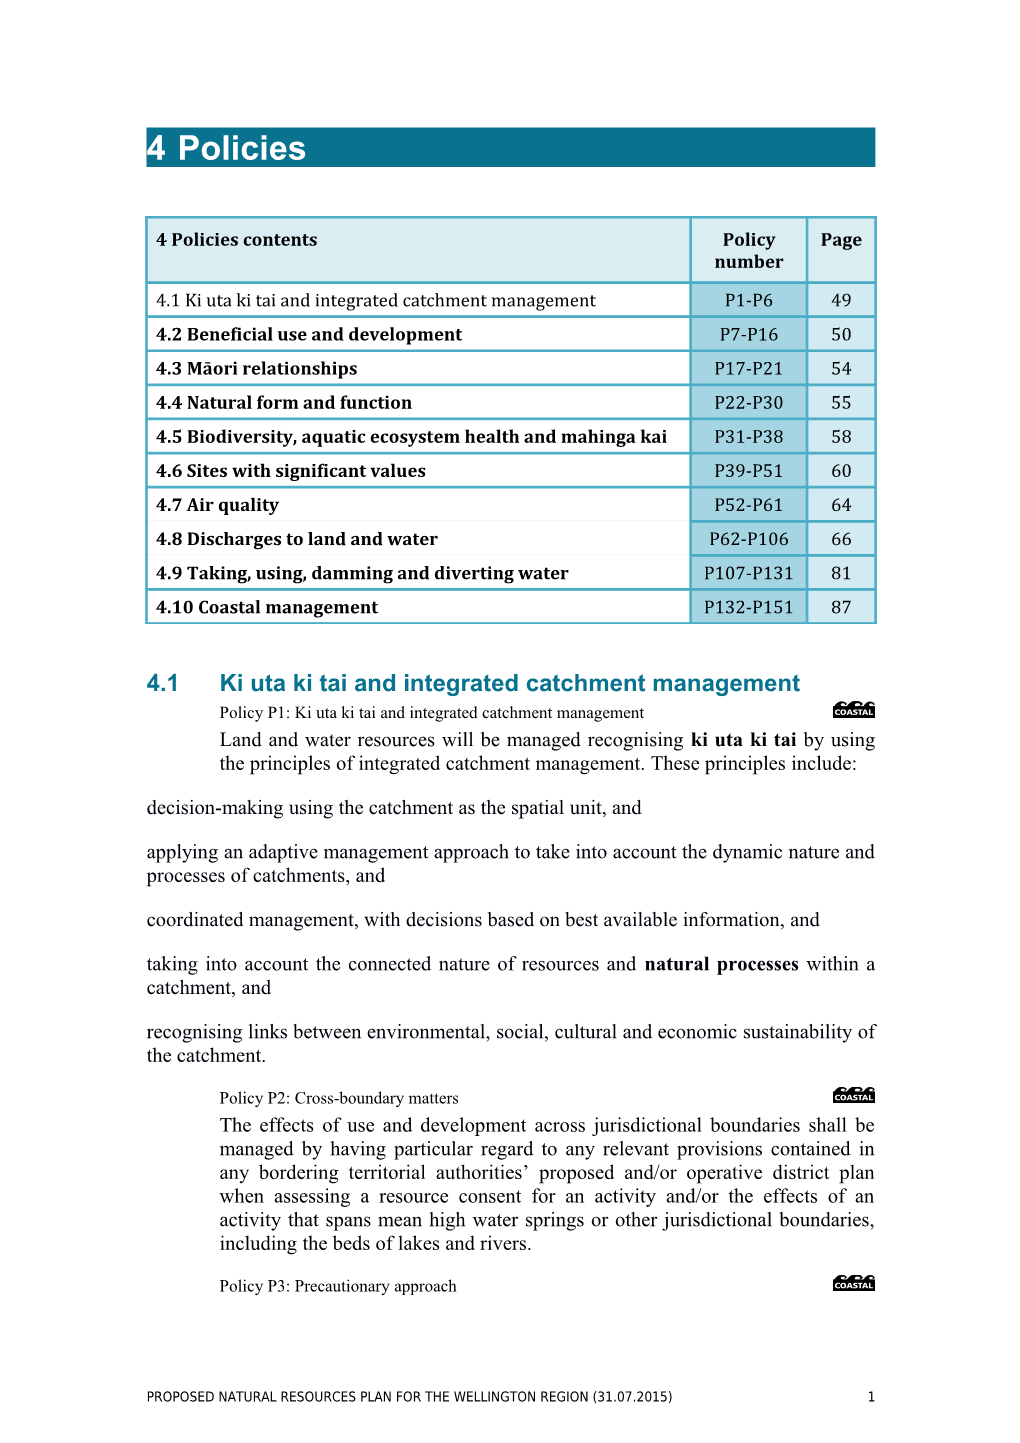 Policy P1: Ki Uta Ki Tai and Integrated Catchment Management